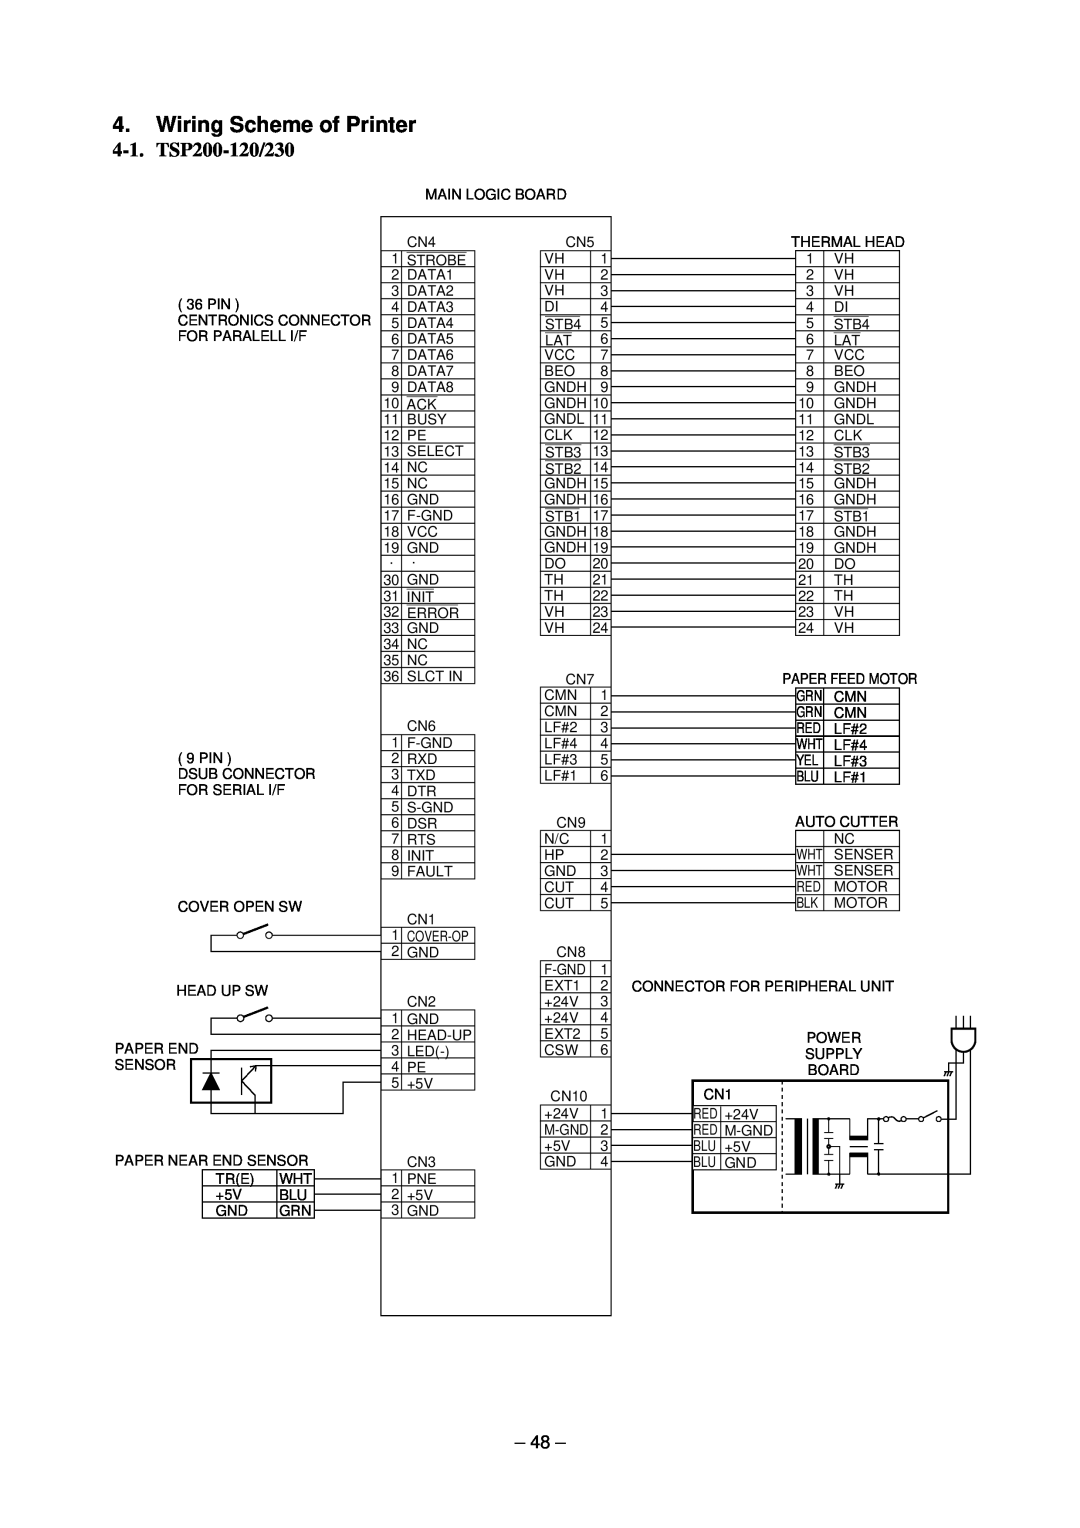 Star Micronics technical manual Wiring Scheme of Printer, TSP200-120/230 